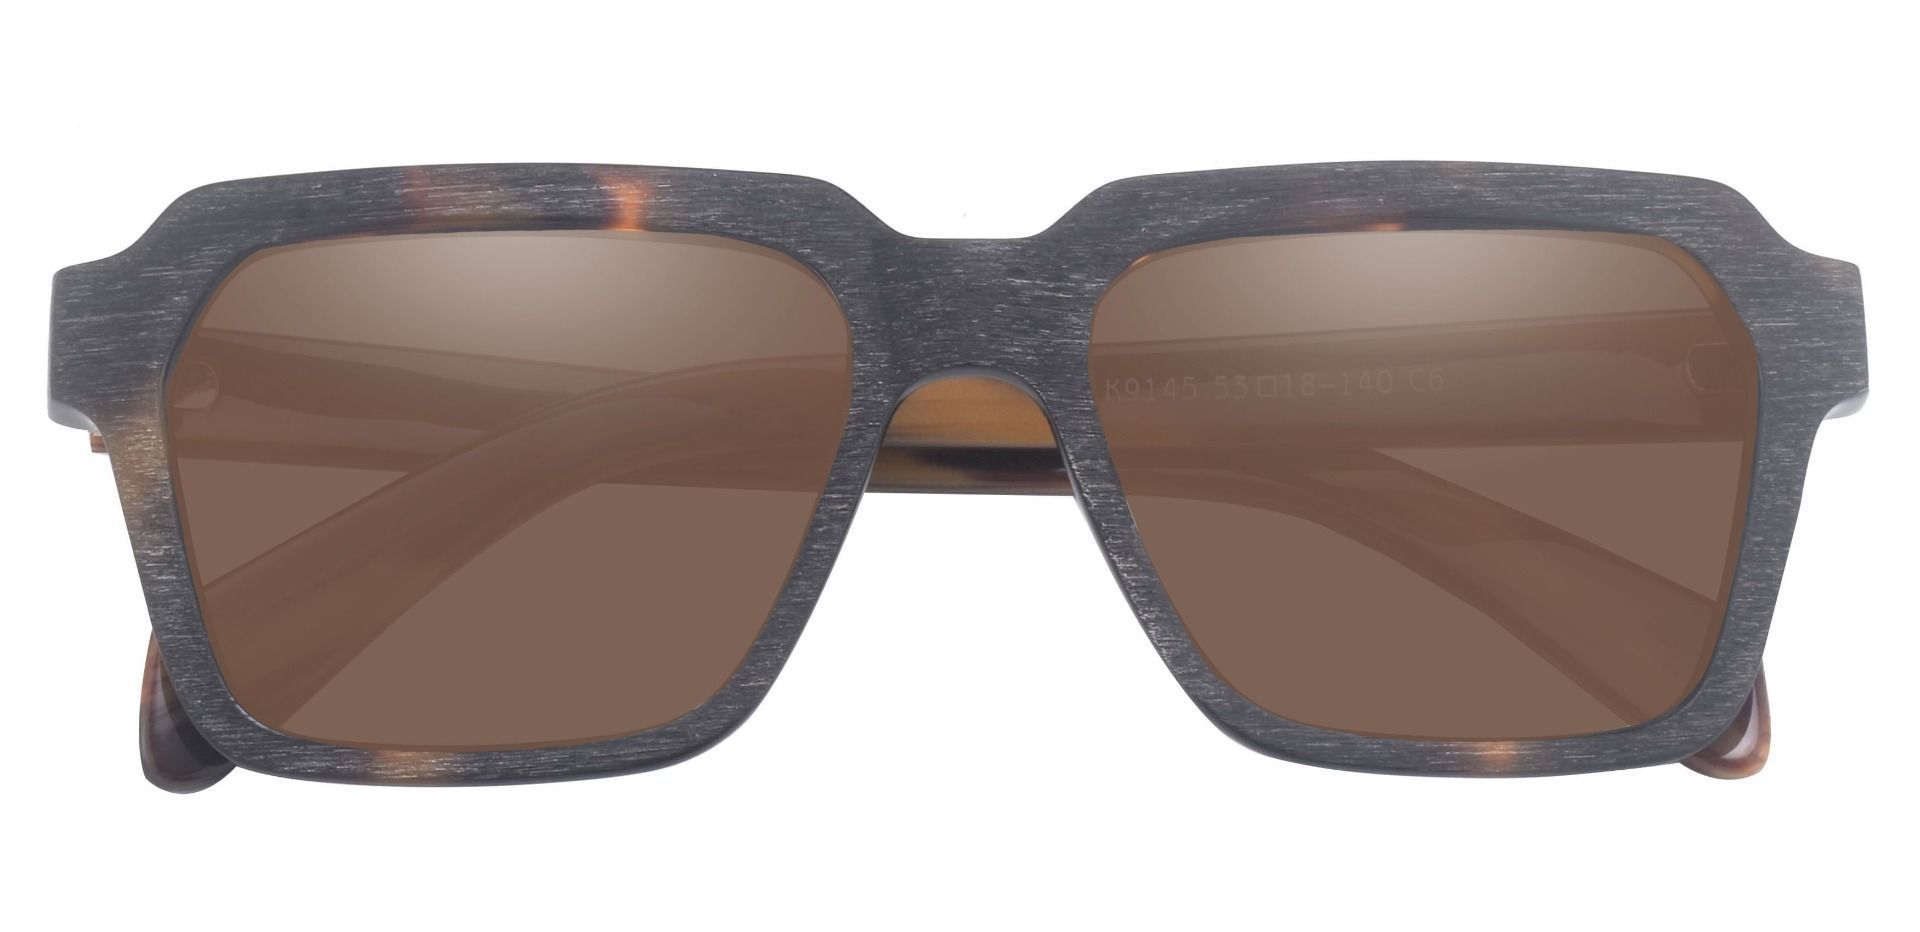 Geronimo Rectangle Prescription Sunglasses - Tortoise Frame With Brown Lenses